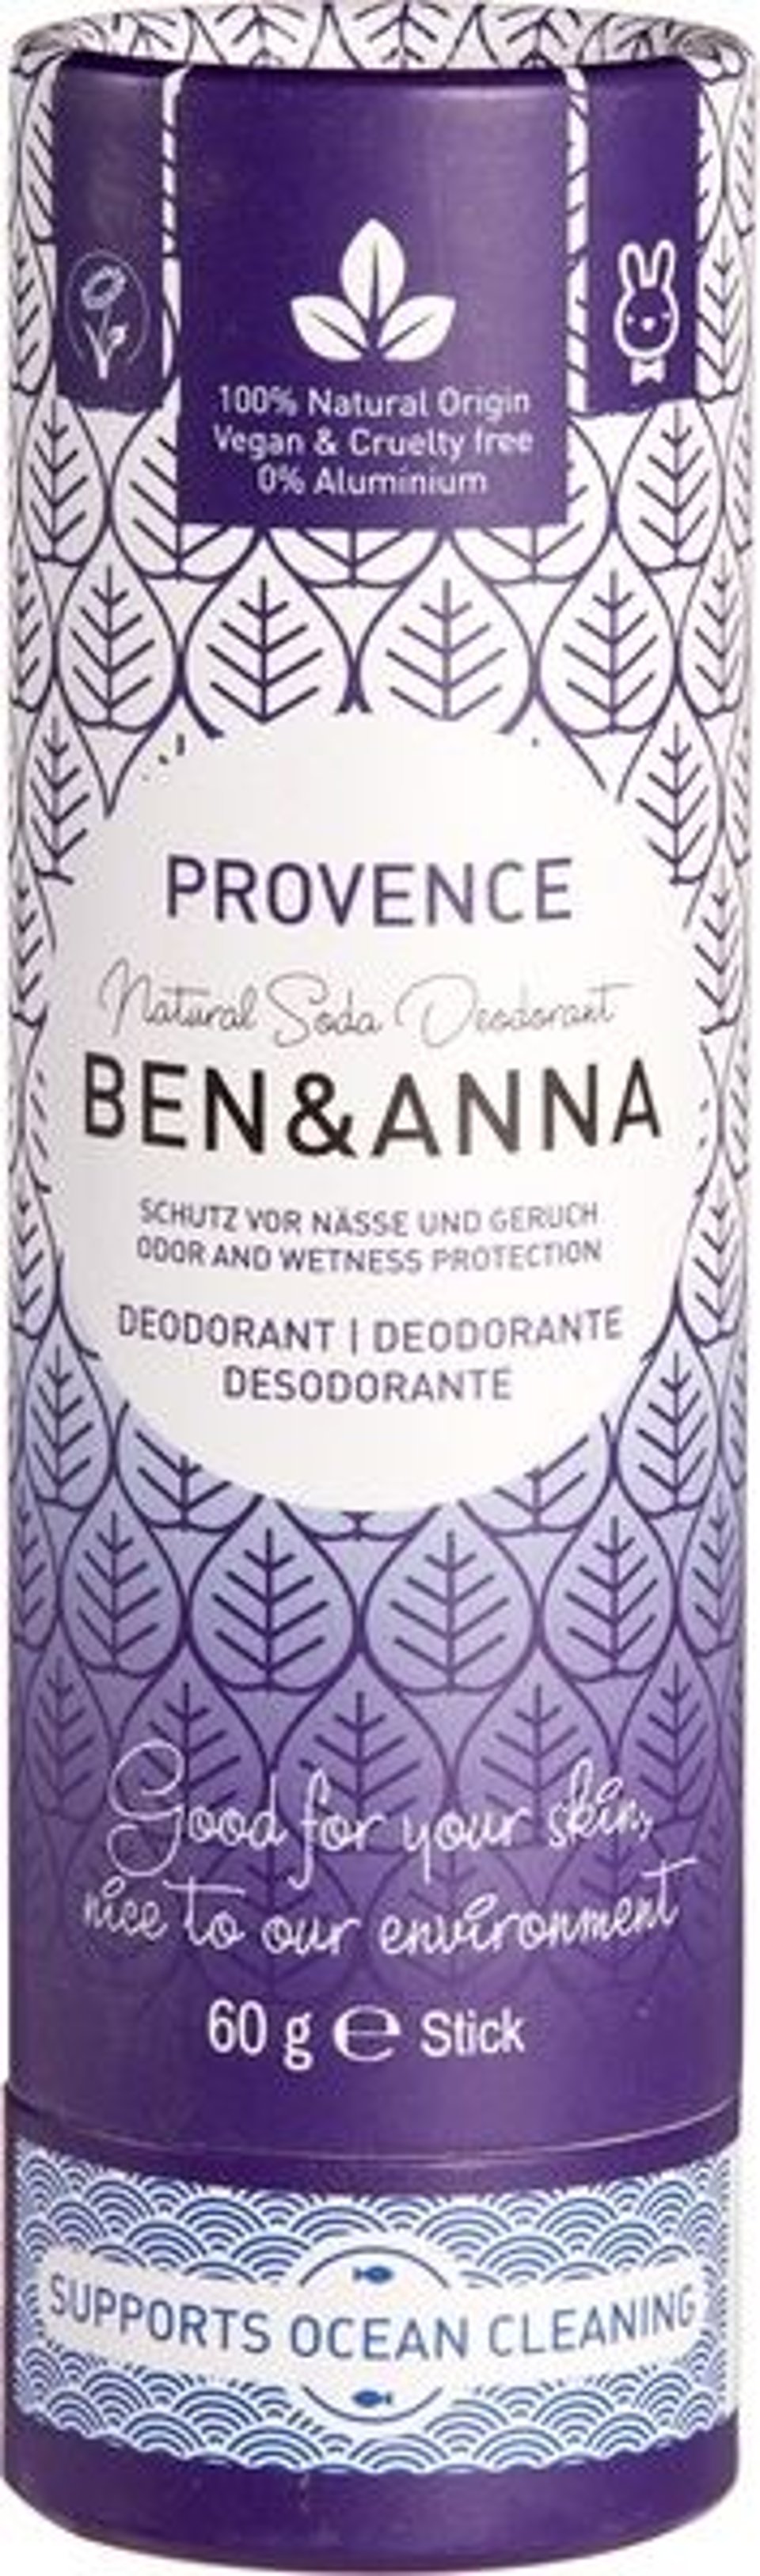 Ben & Anna Deo Provence 60 Gram